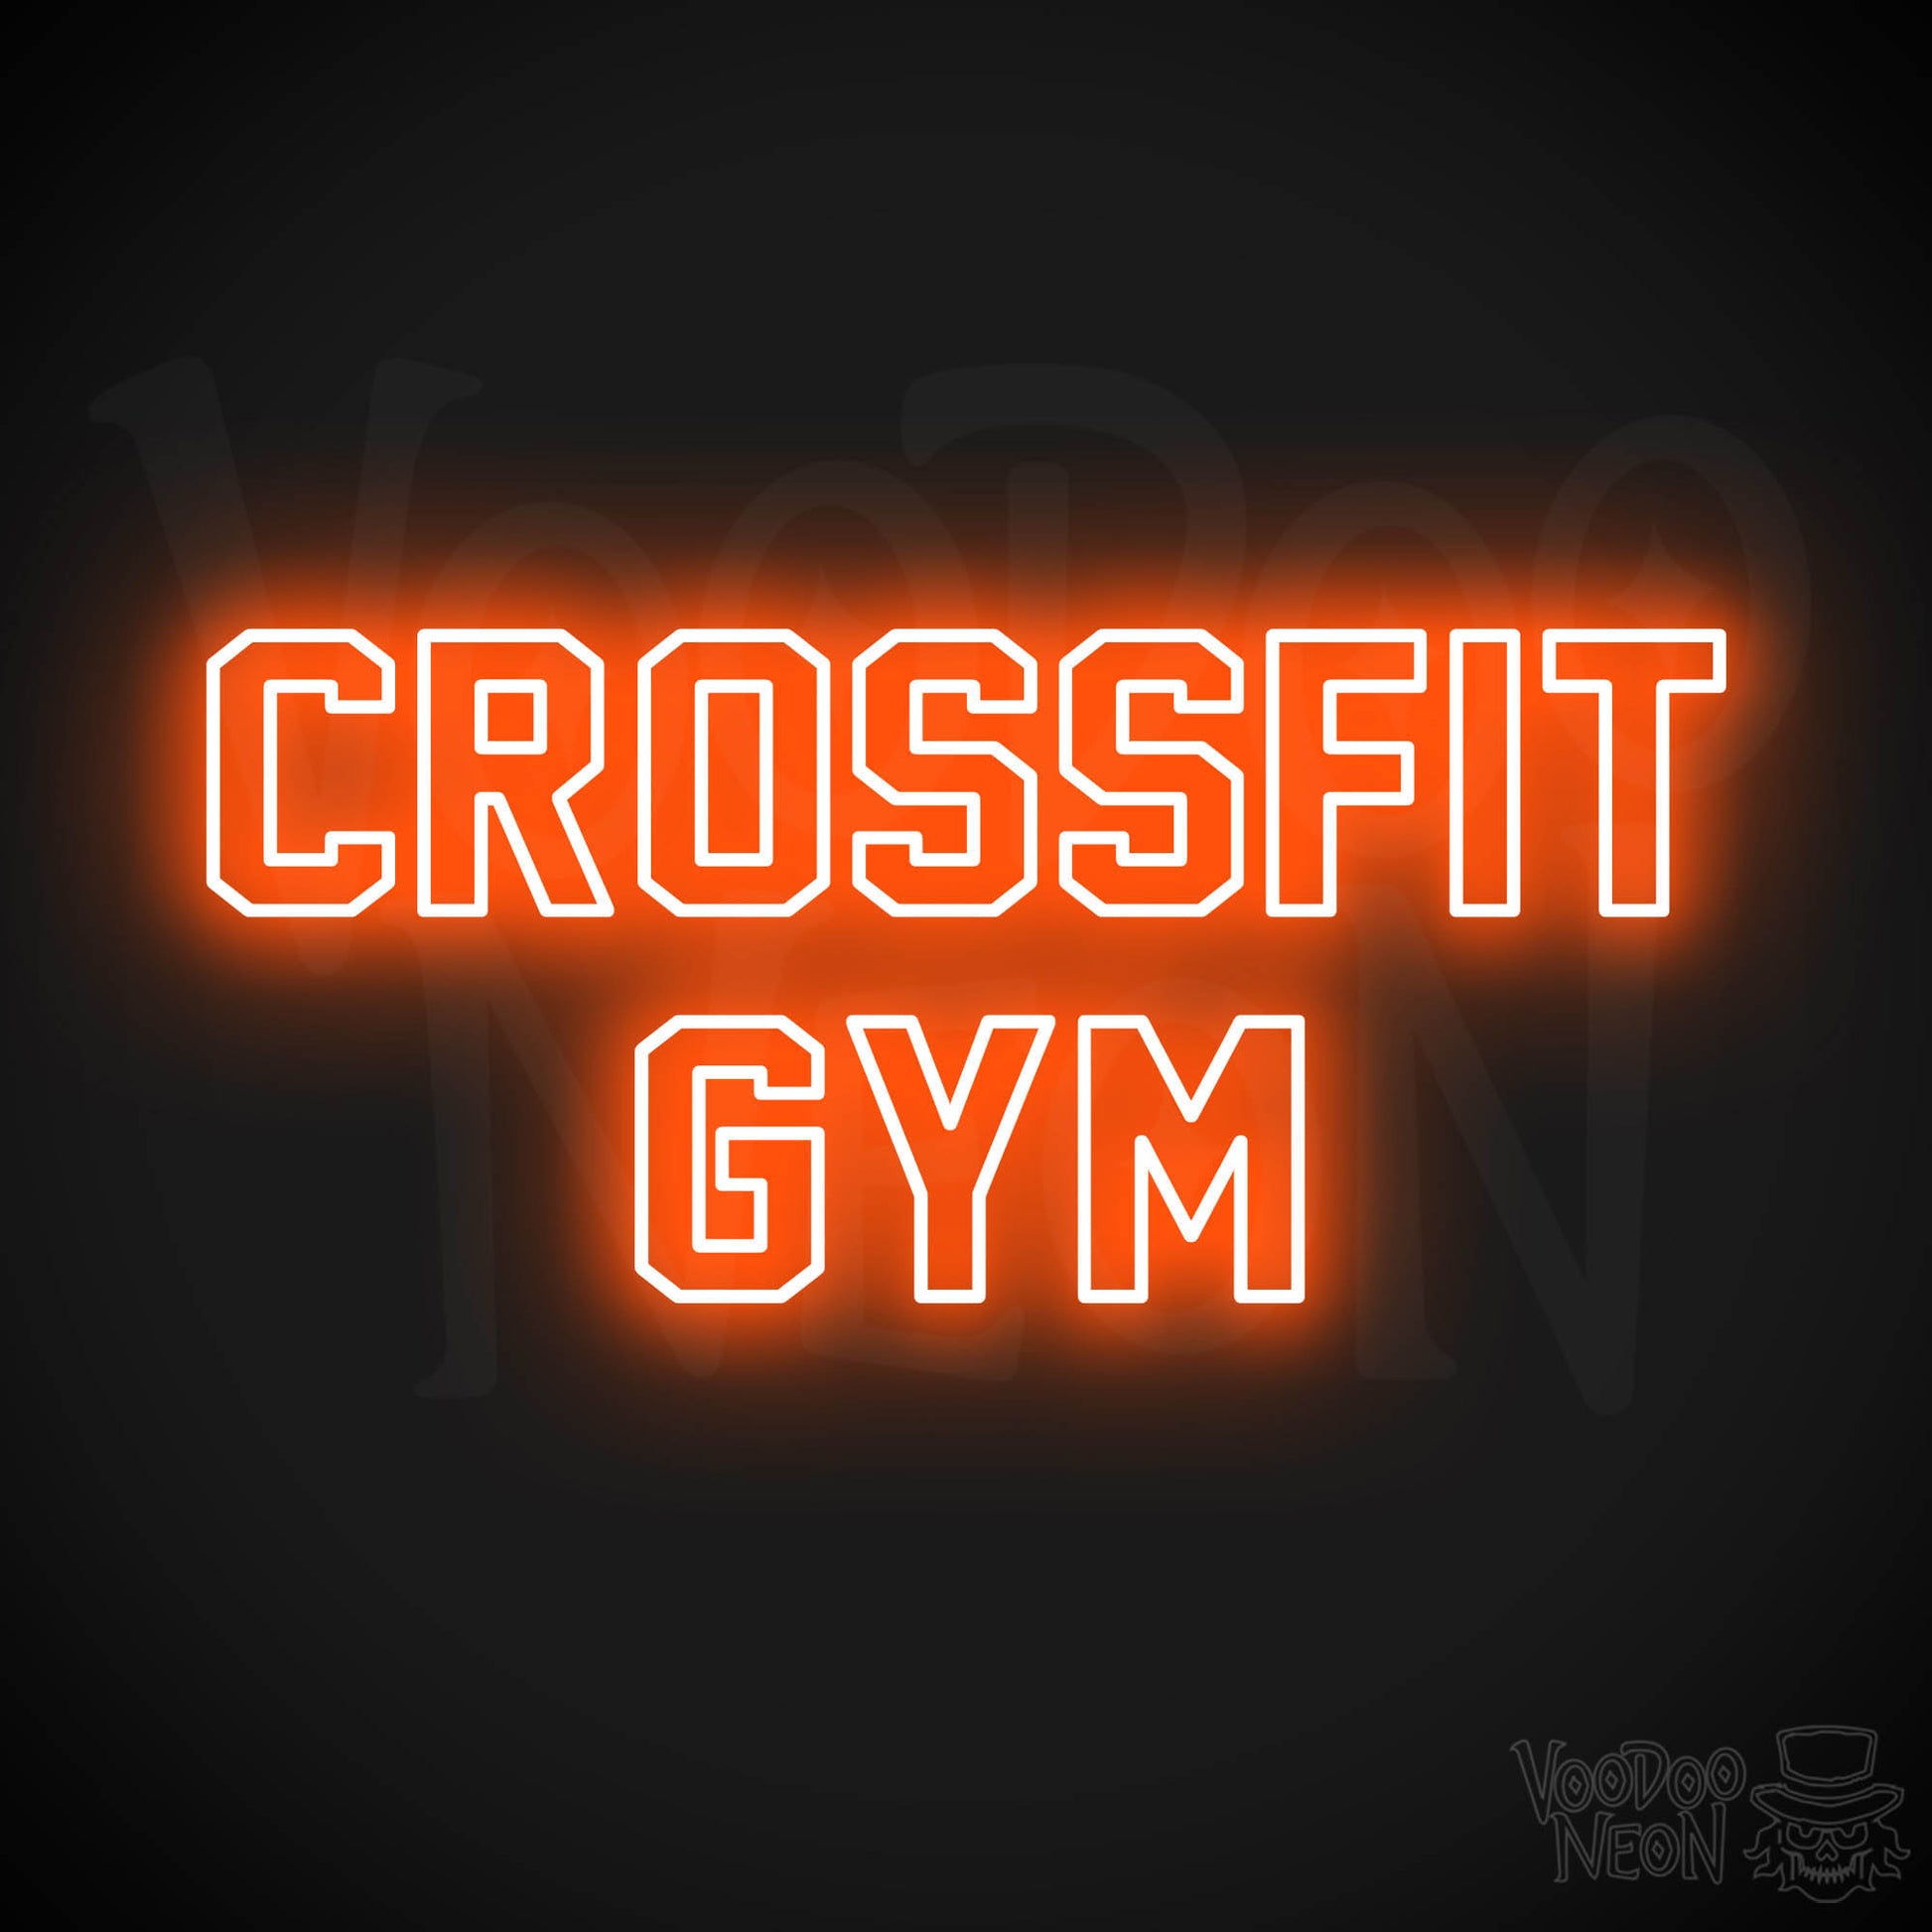 Crossfit Gym LED Neon - Orange